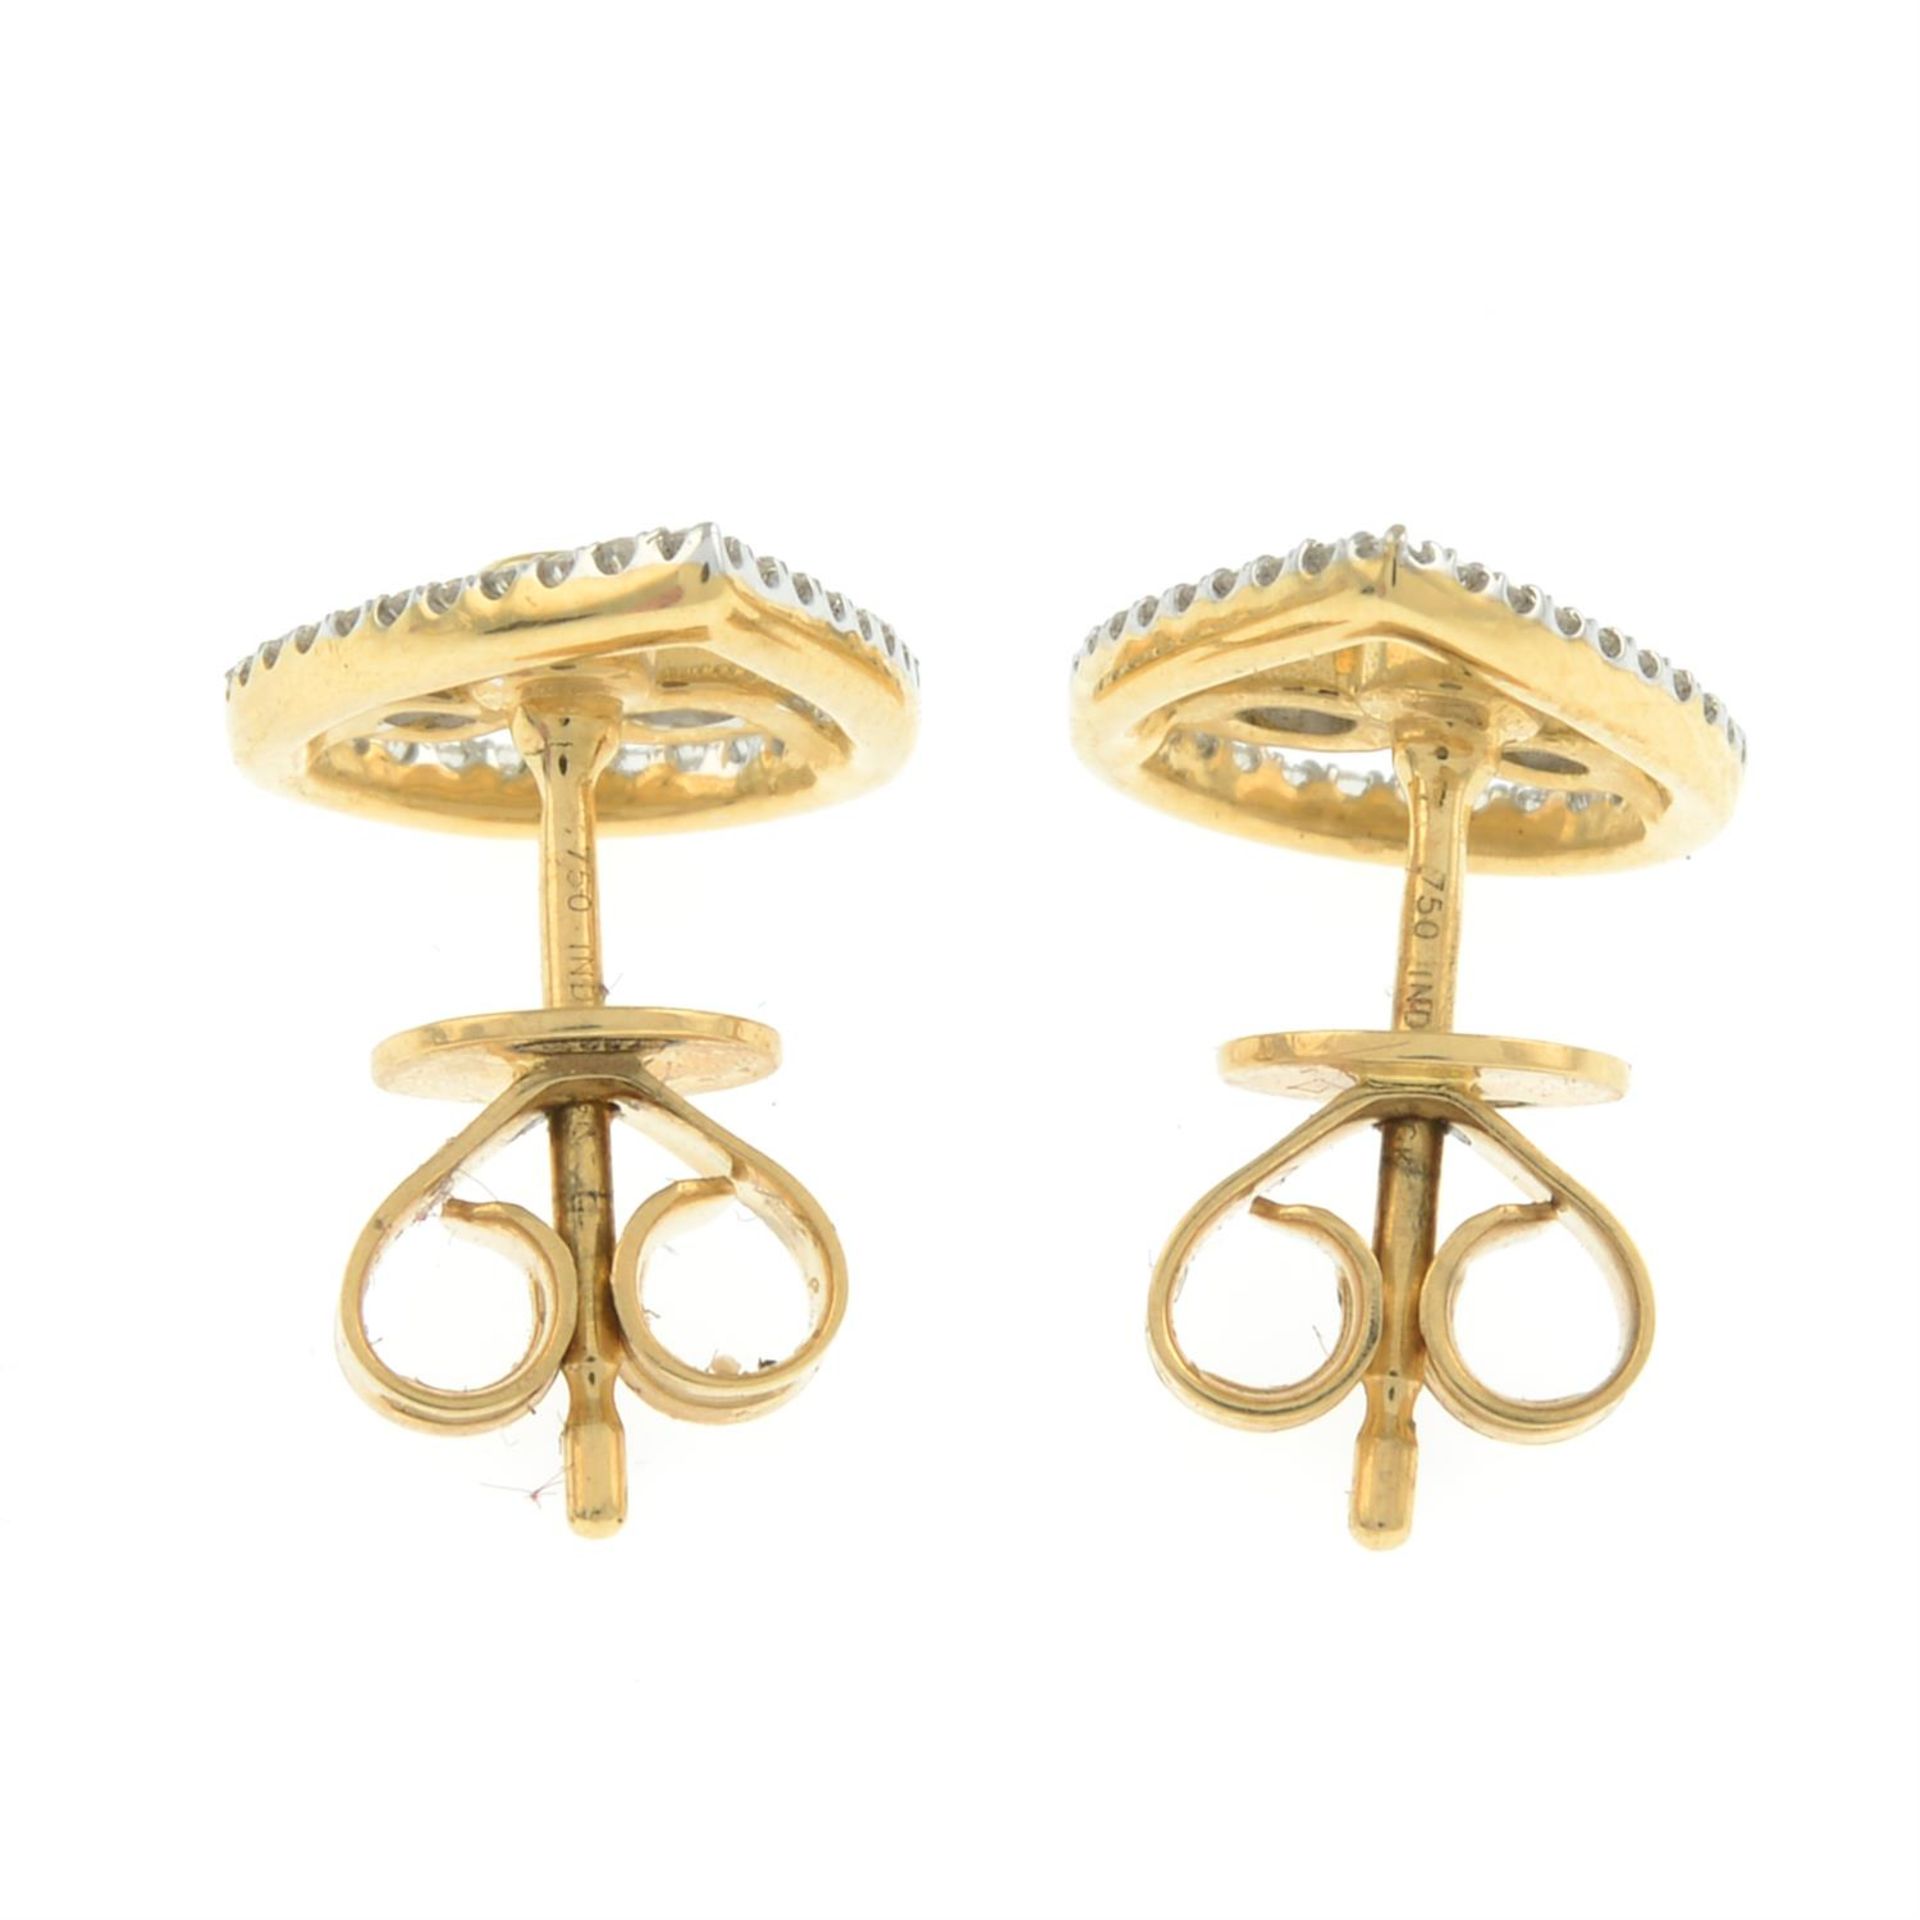 Diamond earrings - Image 2 of 3